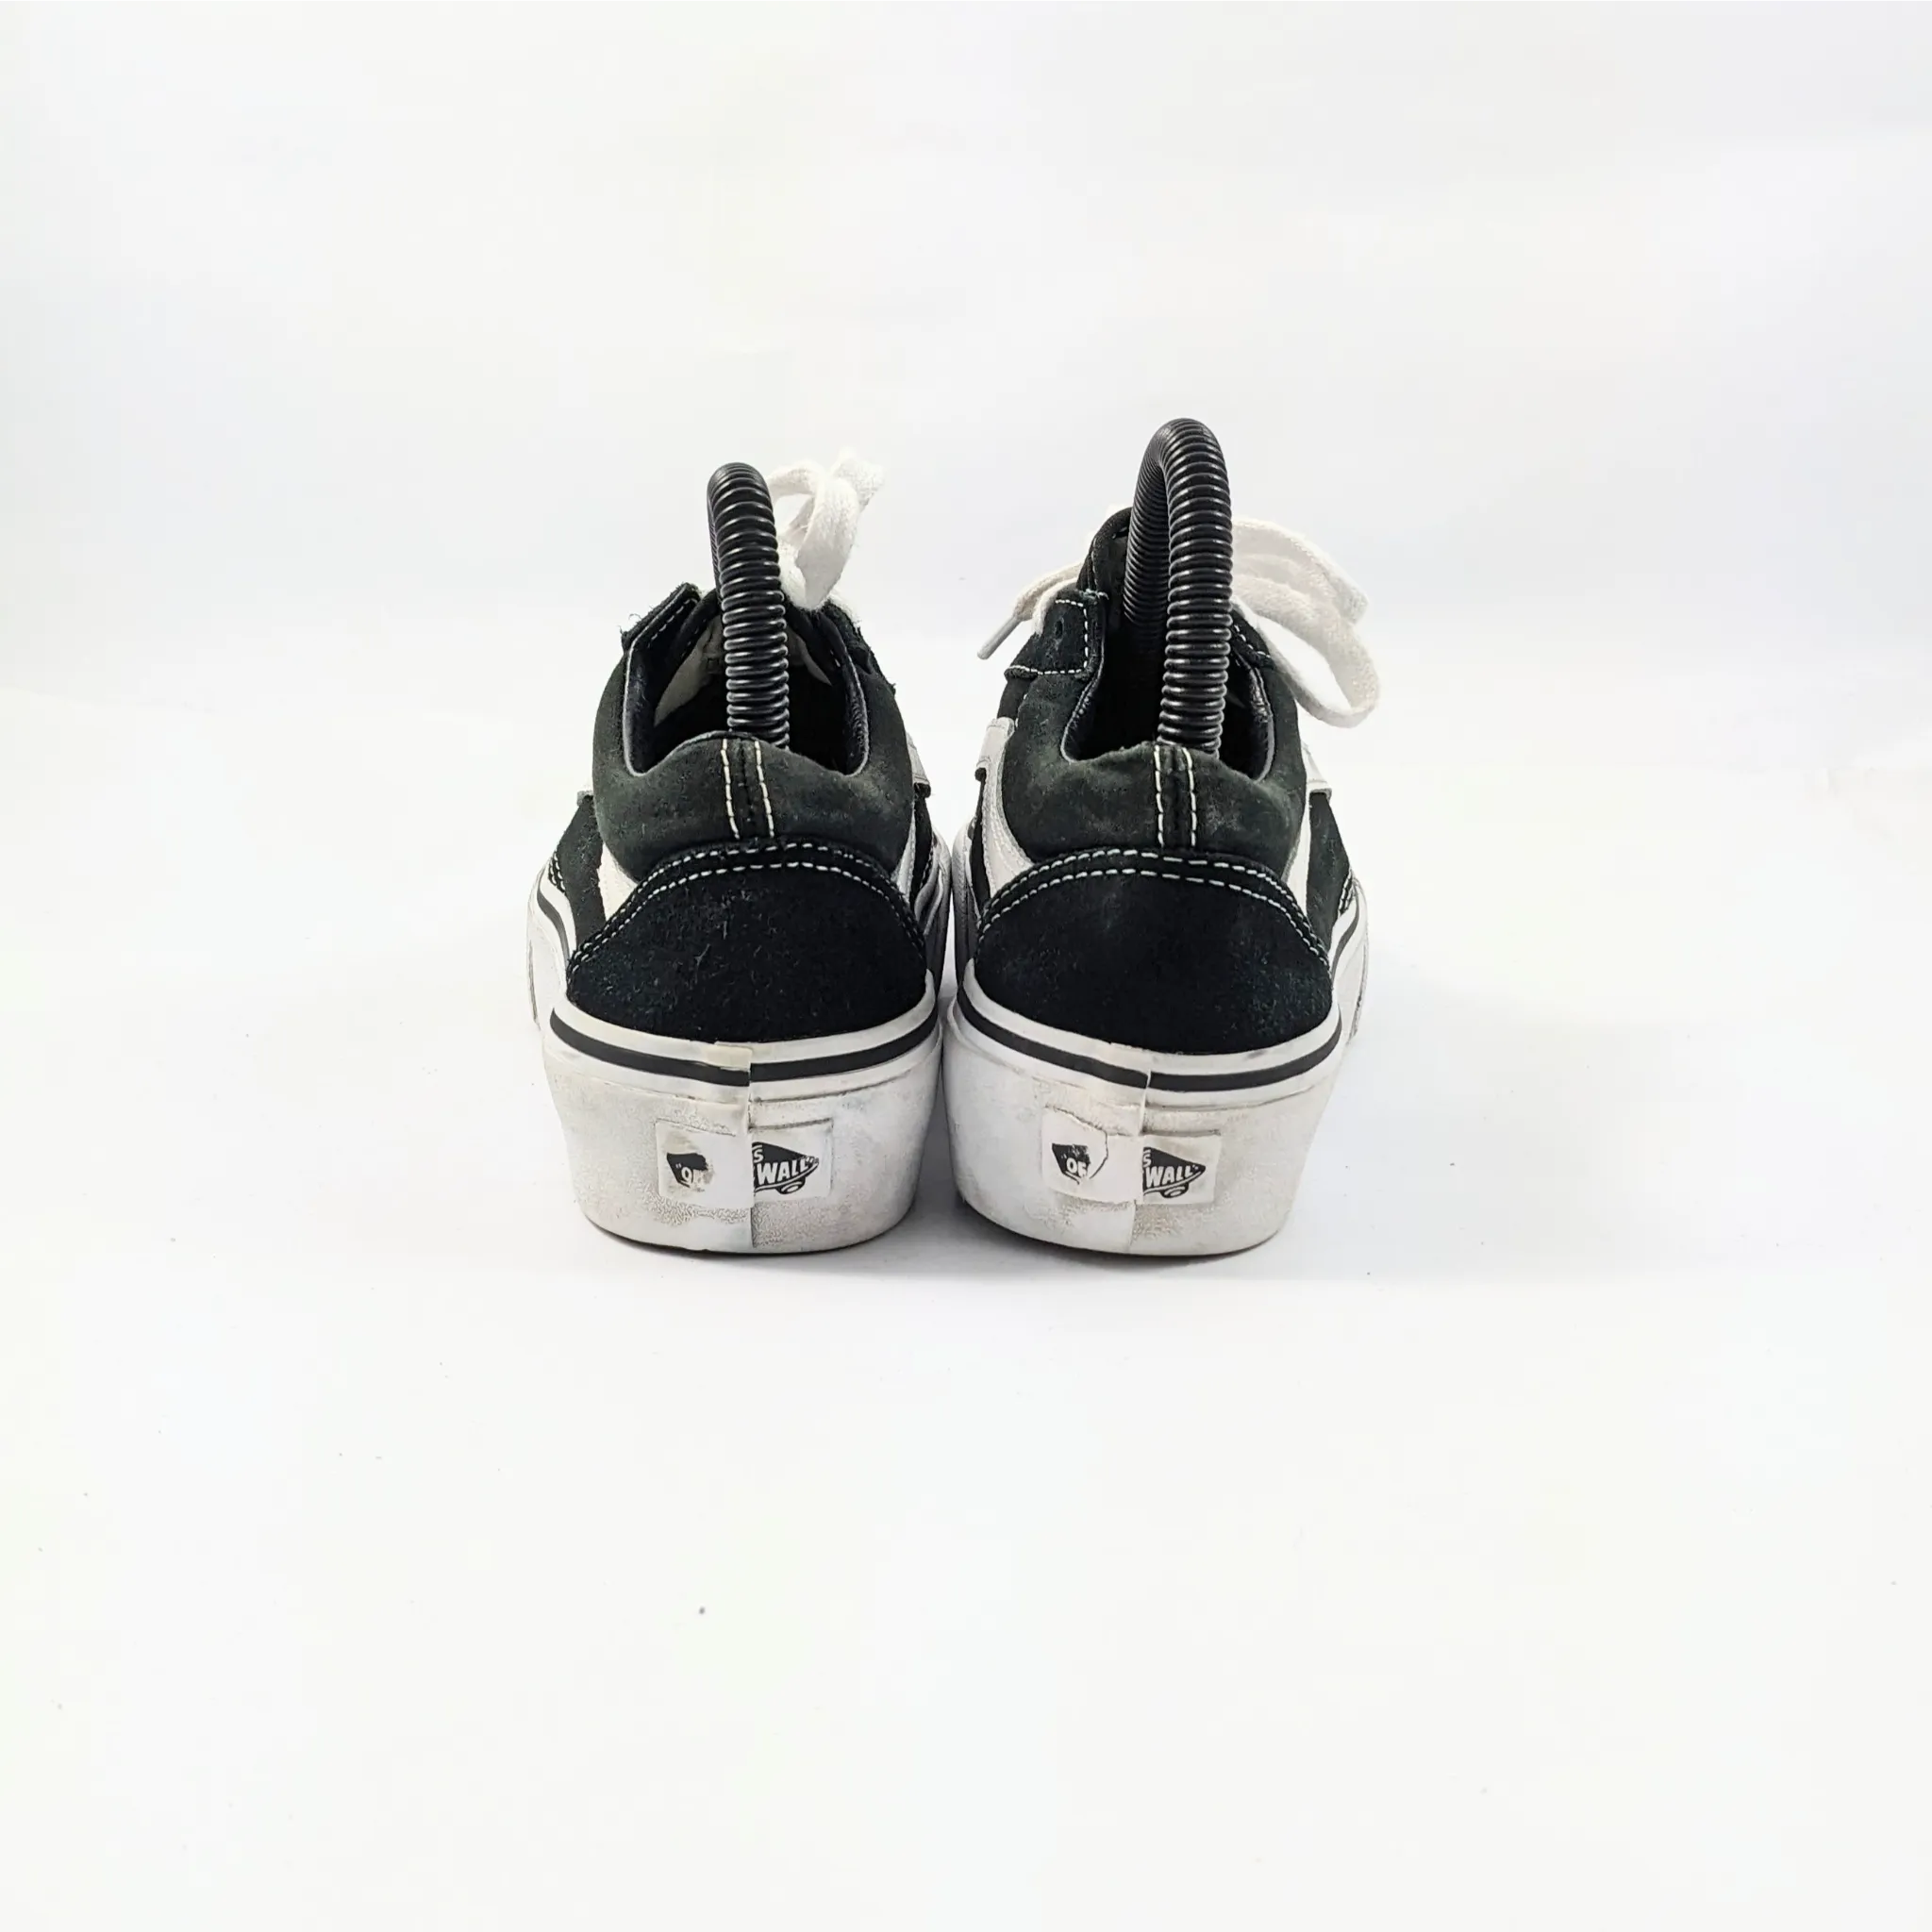 Vans Black Thick Sole Sneakers